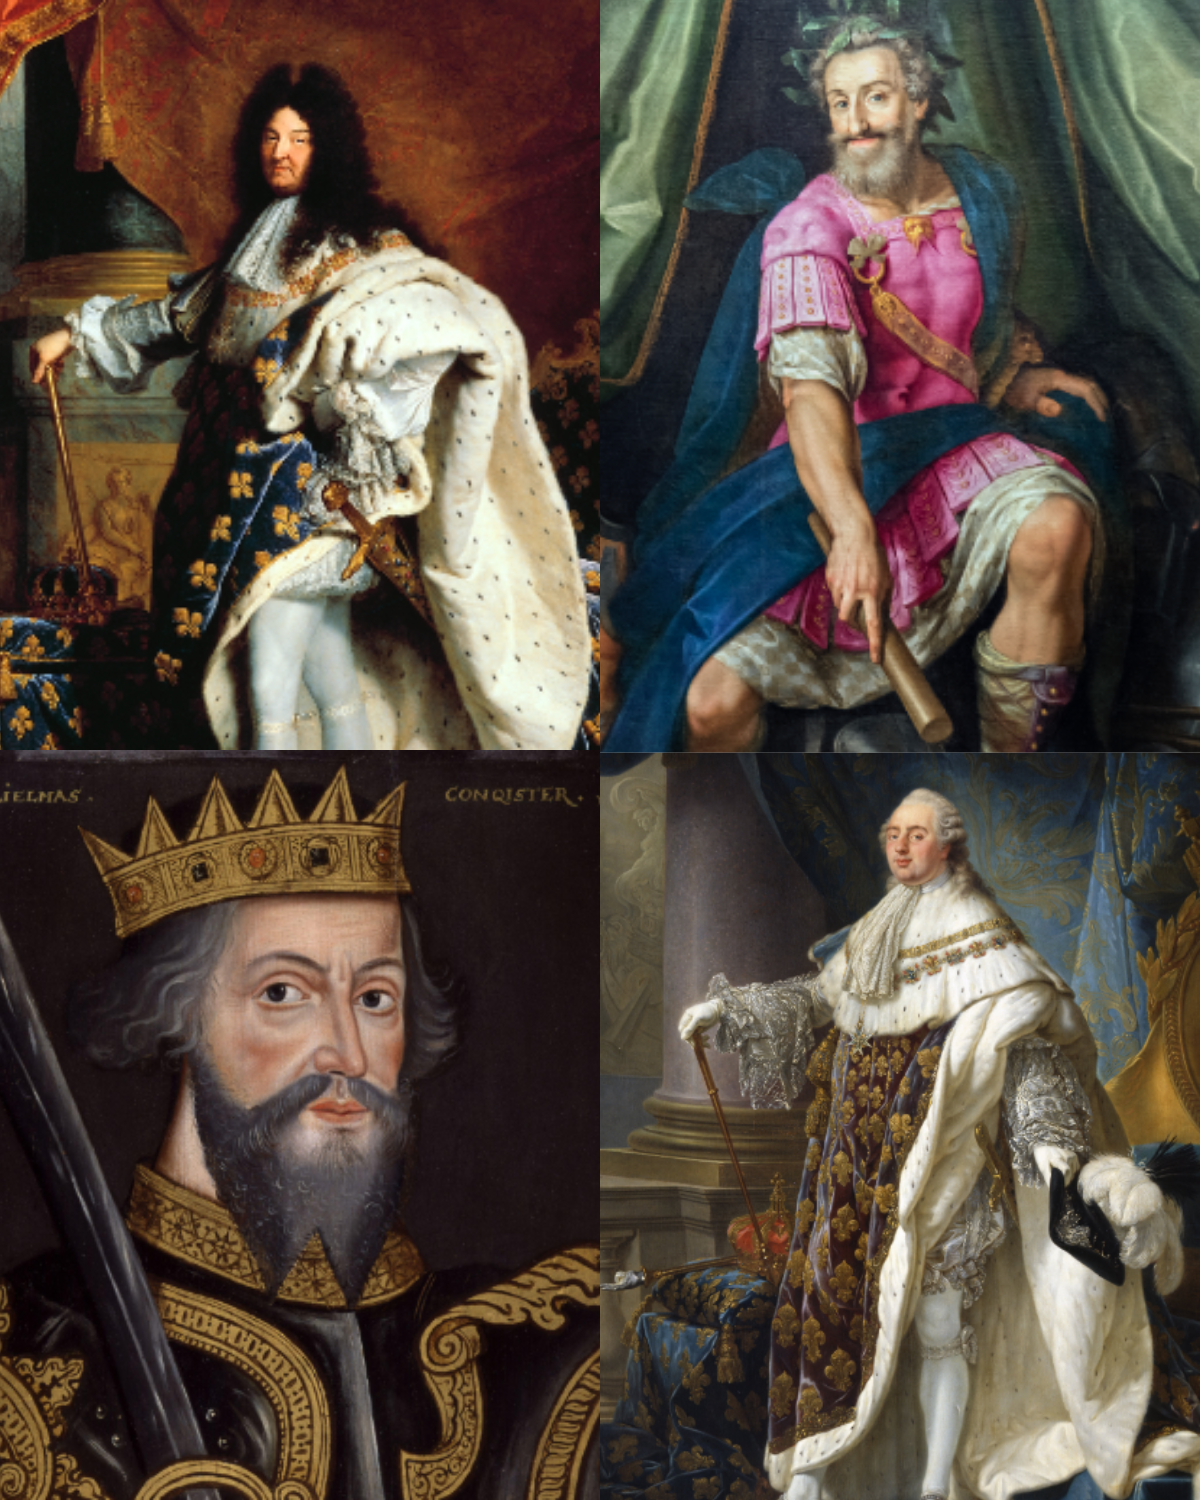 France - Monarchy, Revolution, Culture